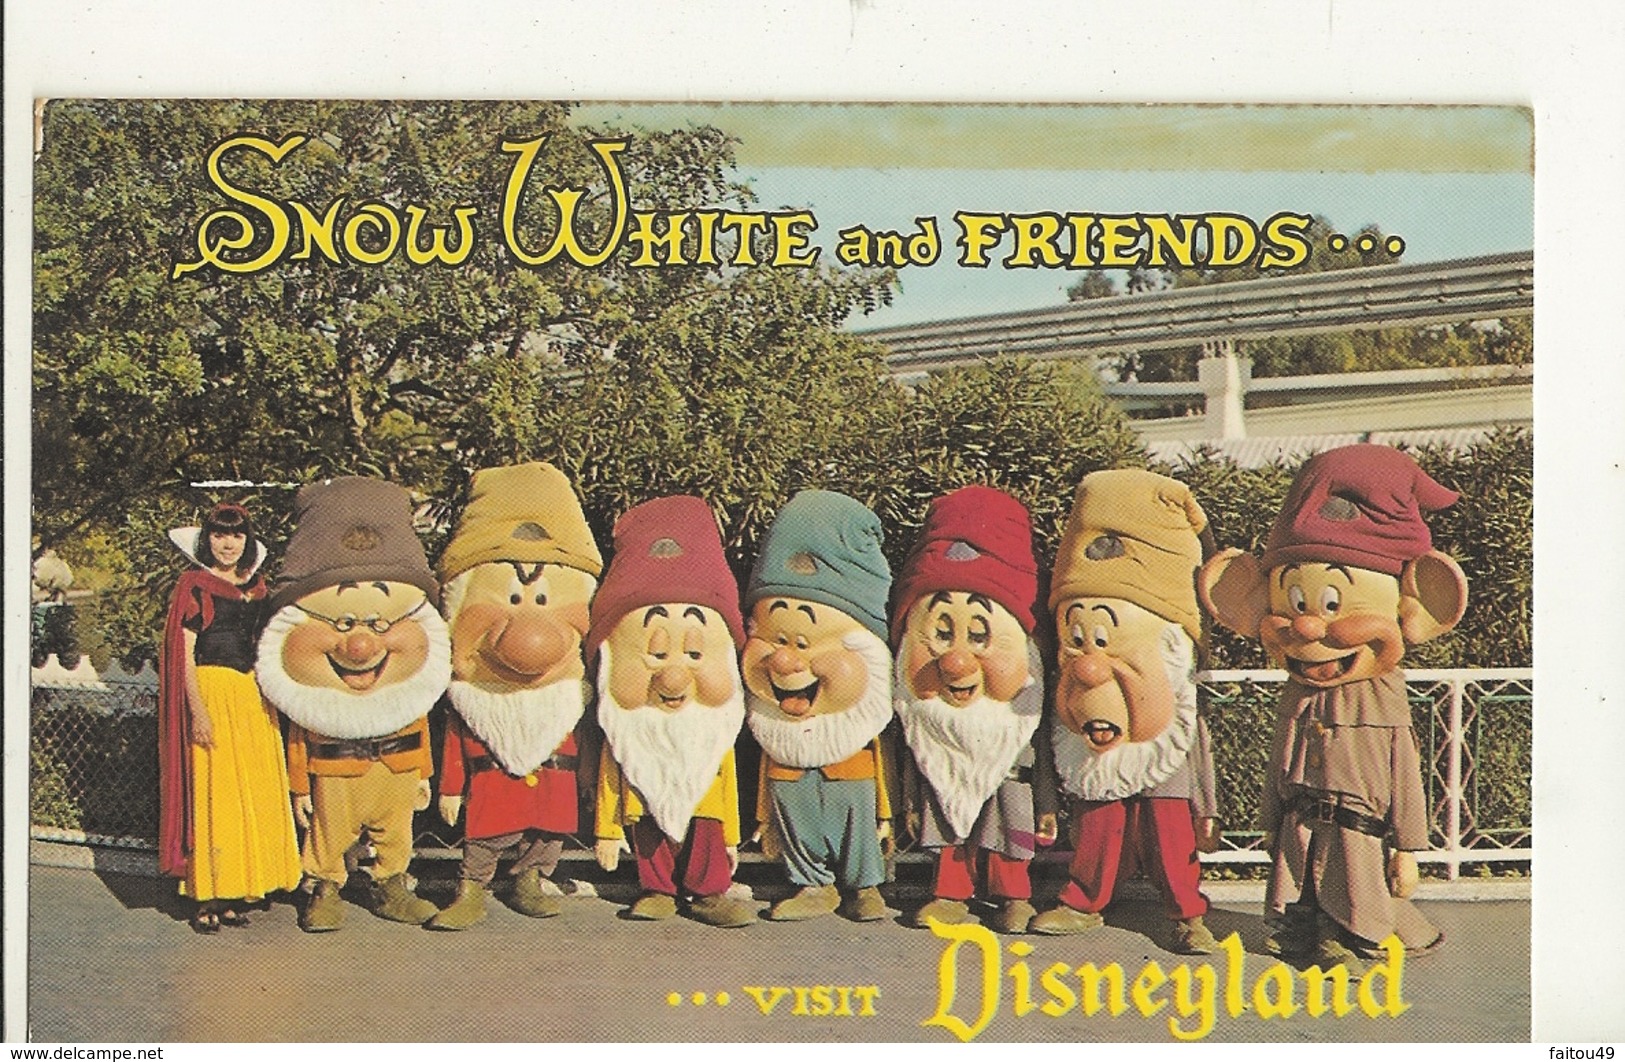 Snow White And Friends   5 - Disneyland